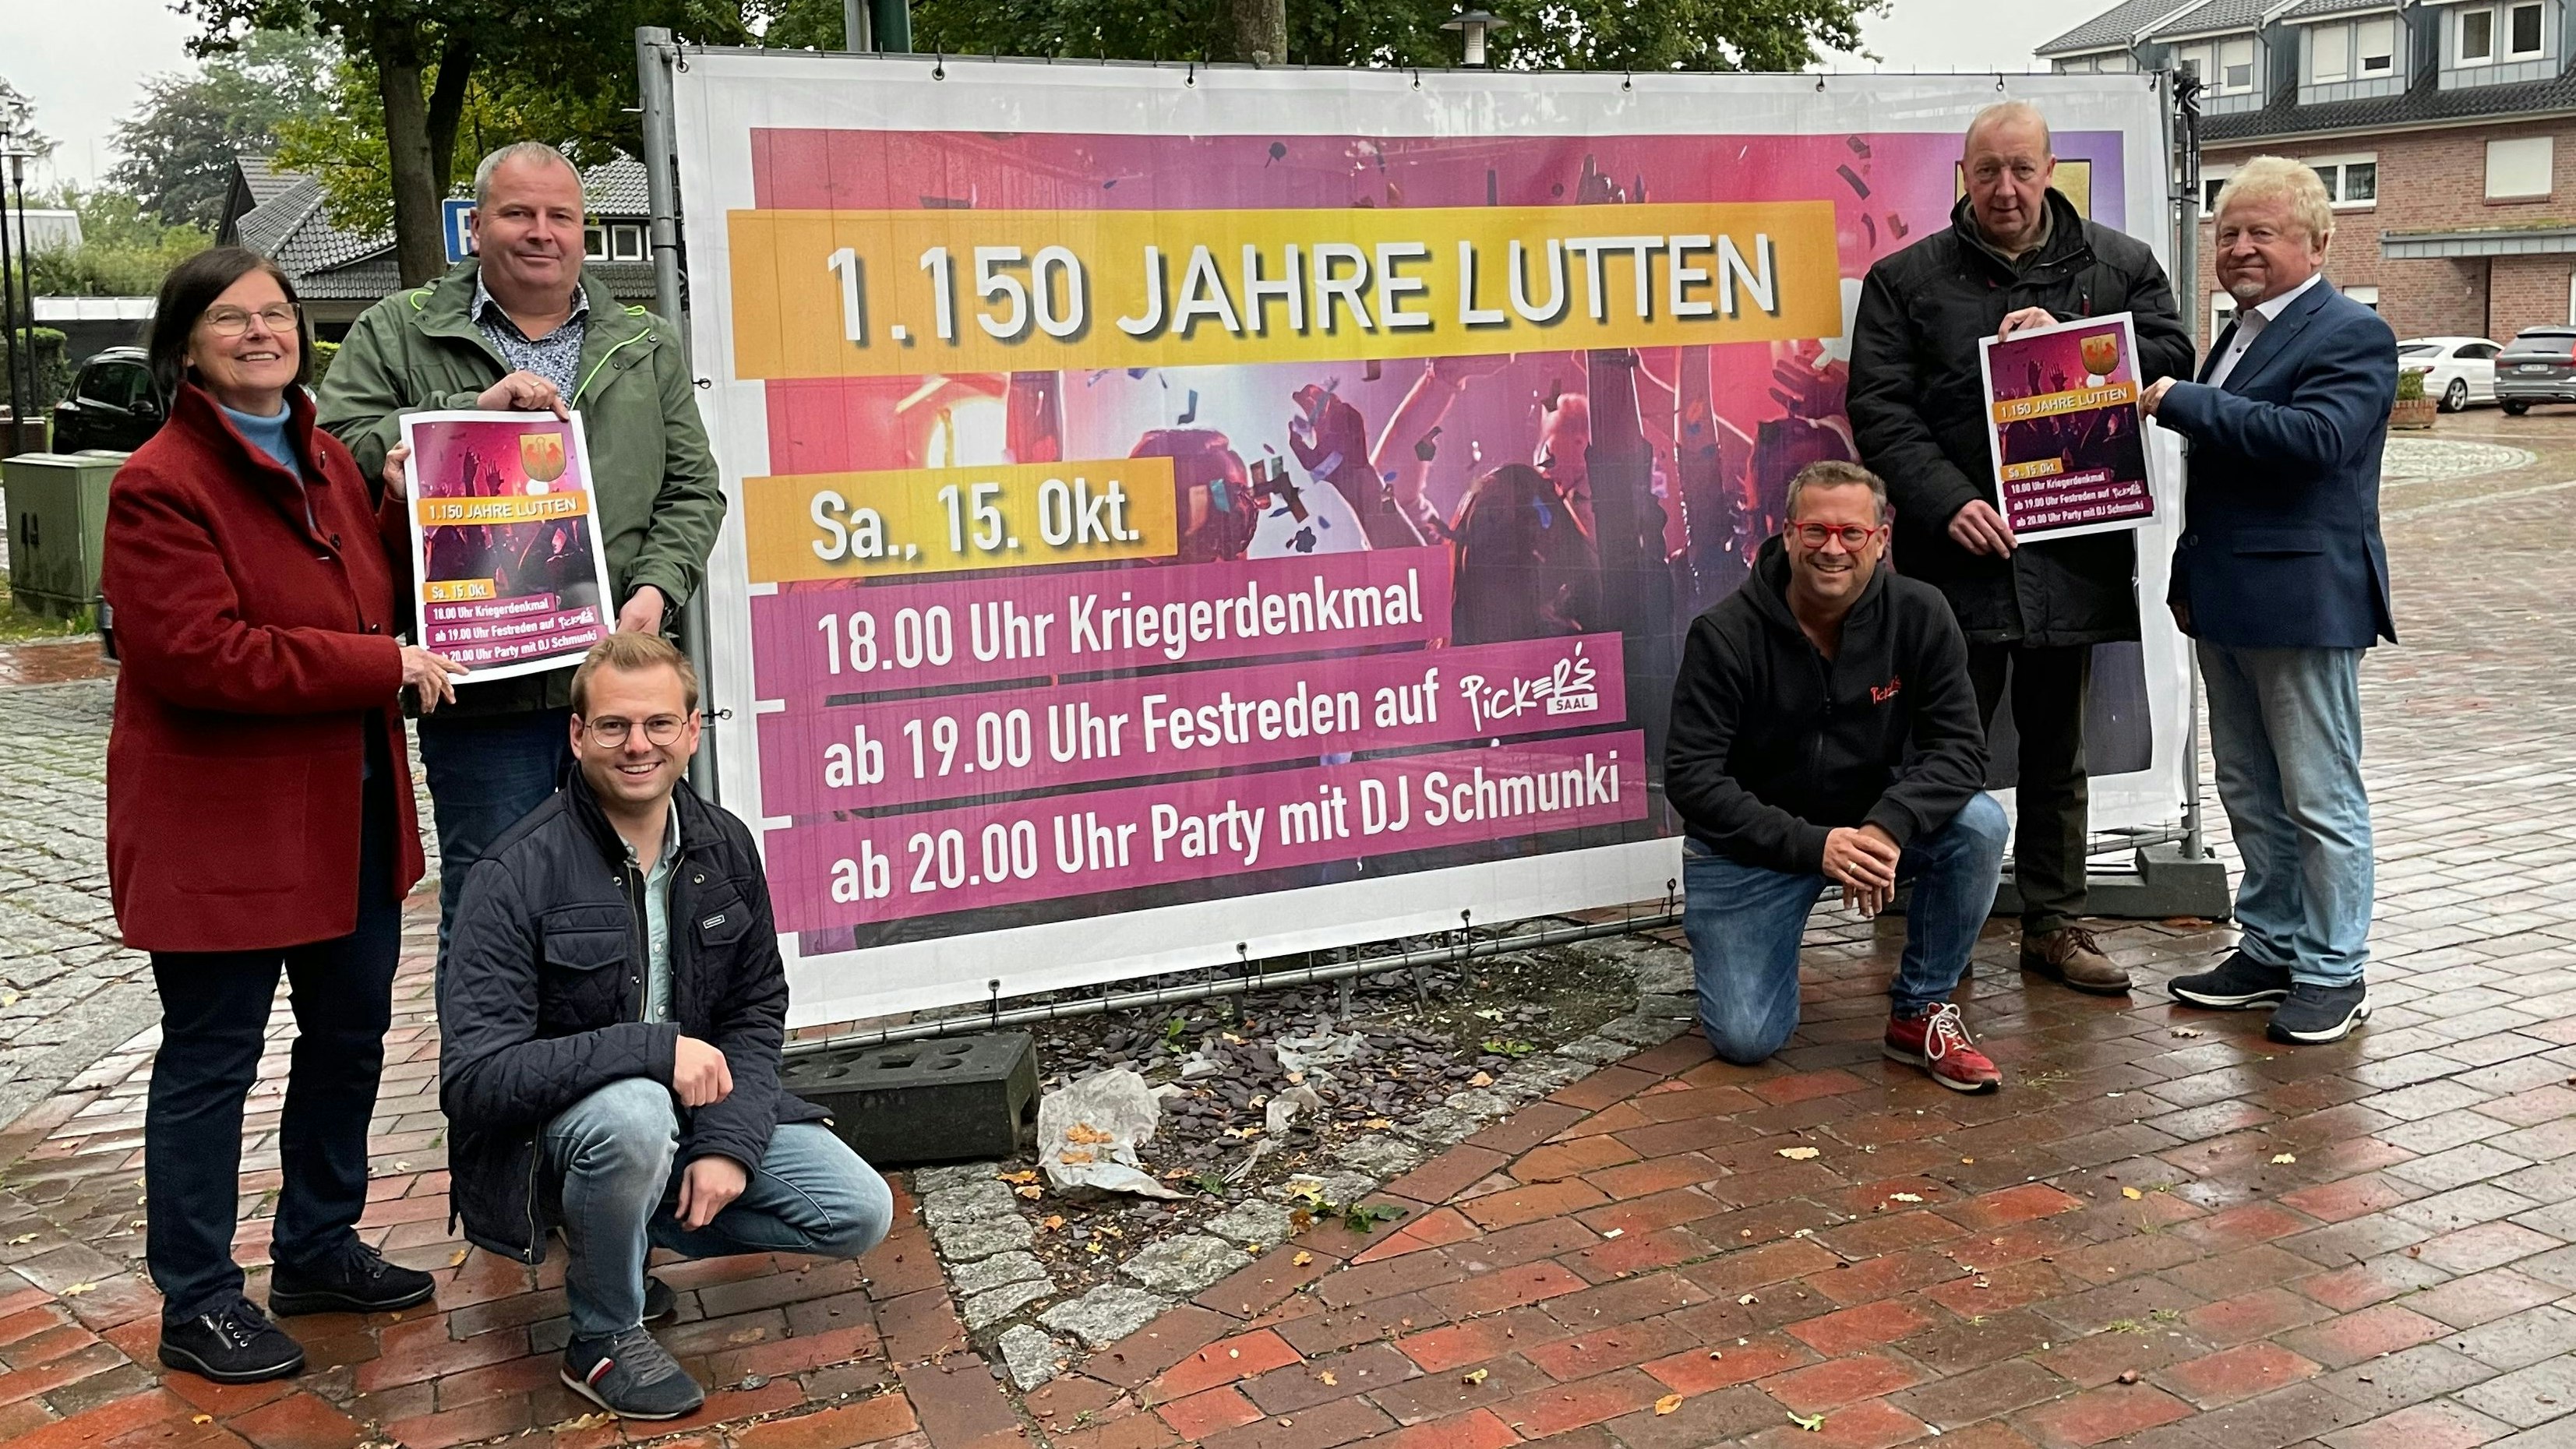 Der Festausschuss: Birgit Meyer (von links), Peter Surmann, Bastian Stukenborg, Stefan Surmann, Klaus Bohmann und Alwin Tepe. Foto: Surmann